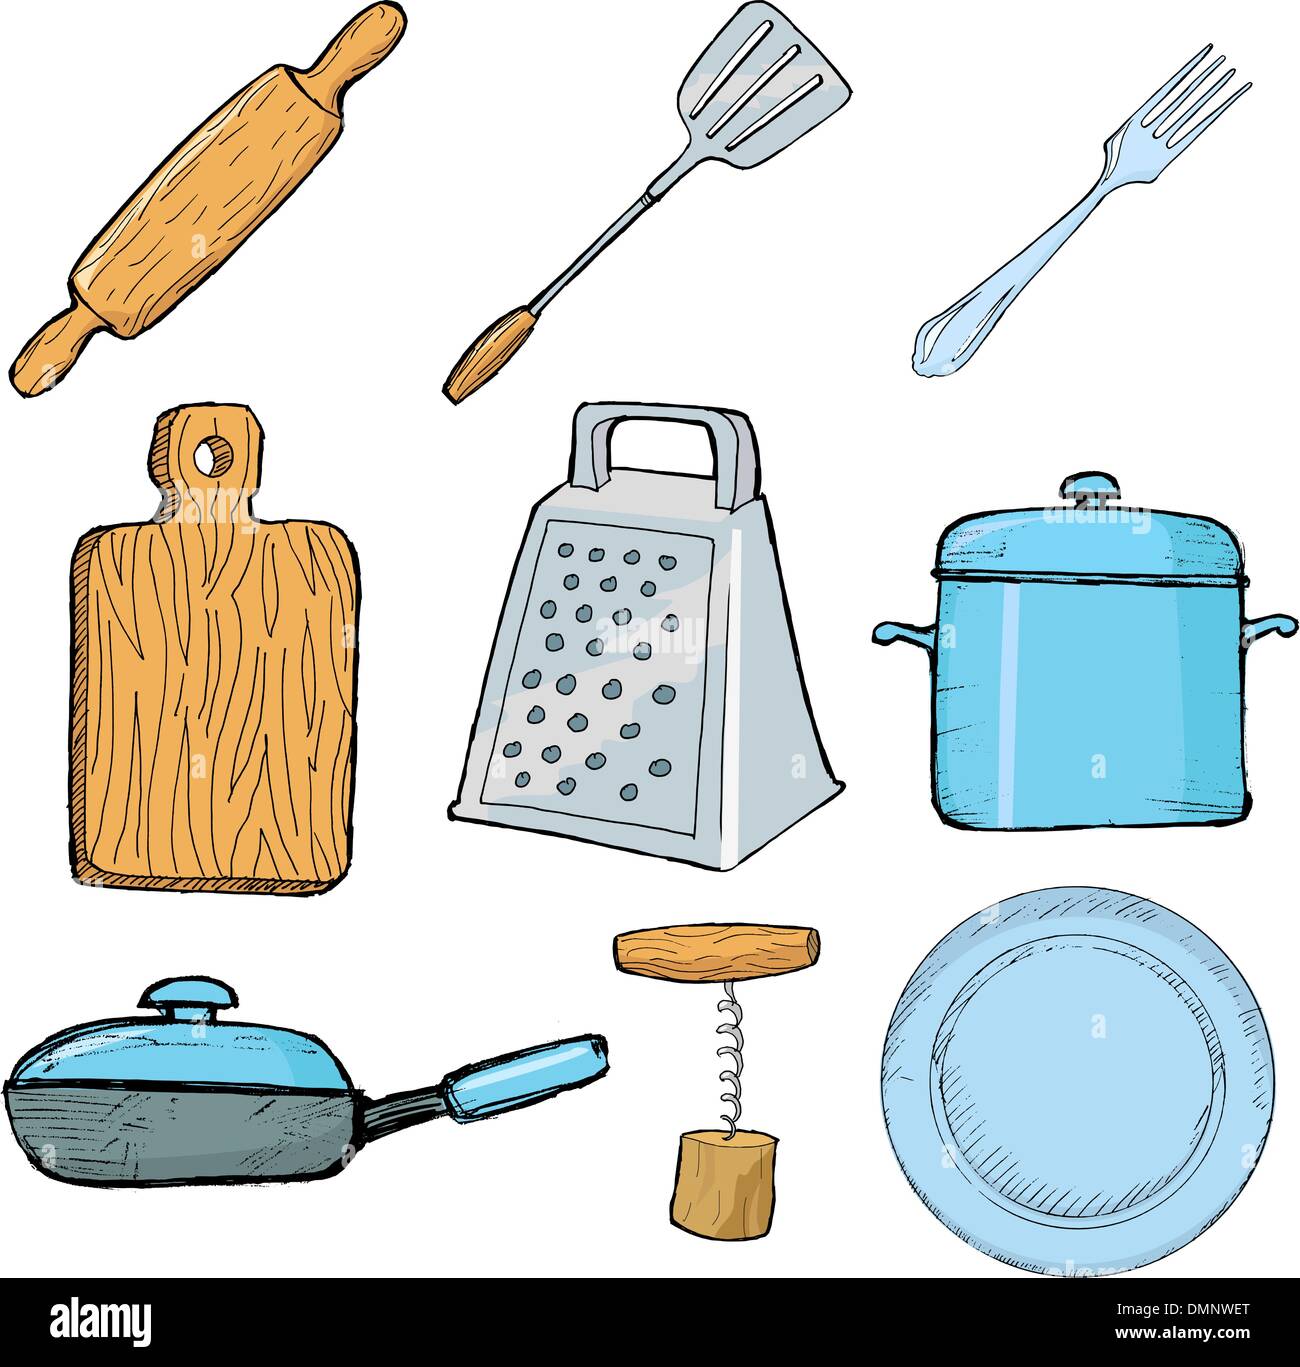 objetos de cocina Imagen Vector de stock - Alamy